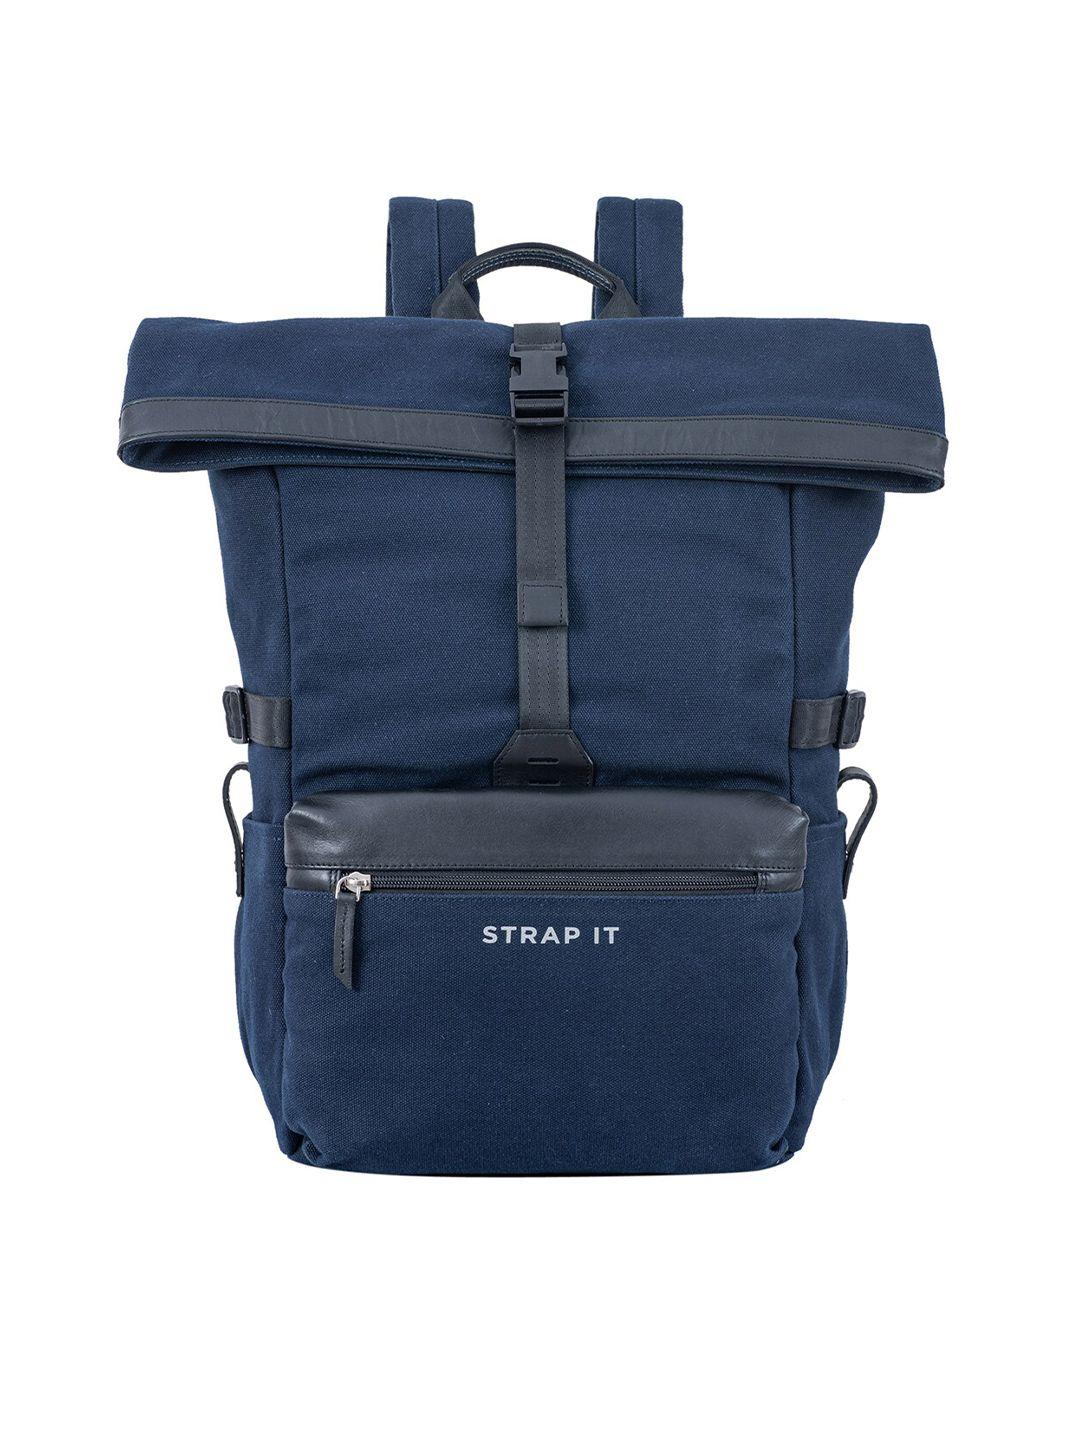 strap it unisex blue durabase backpack with shoe pocket